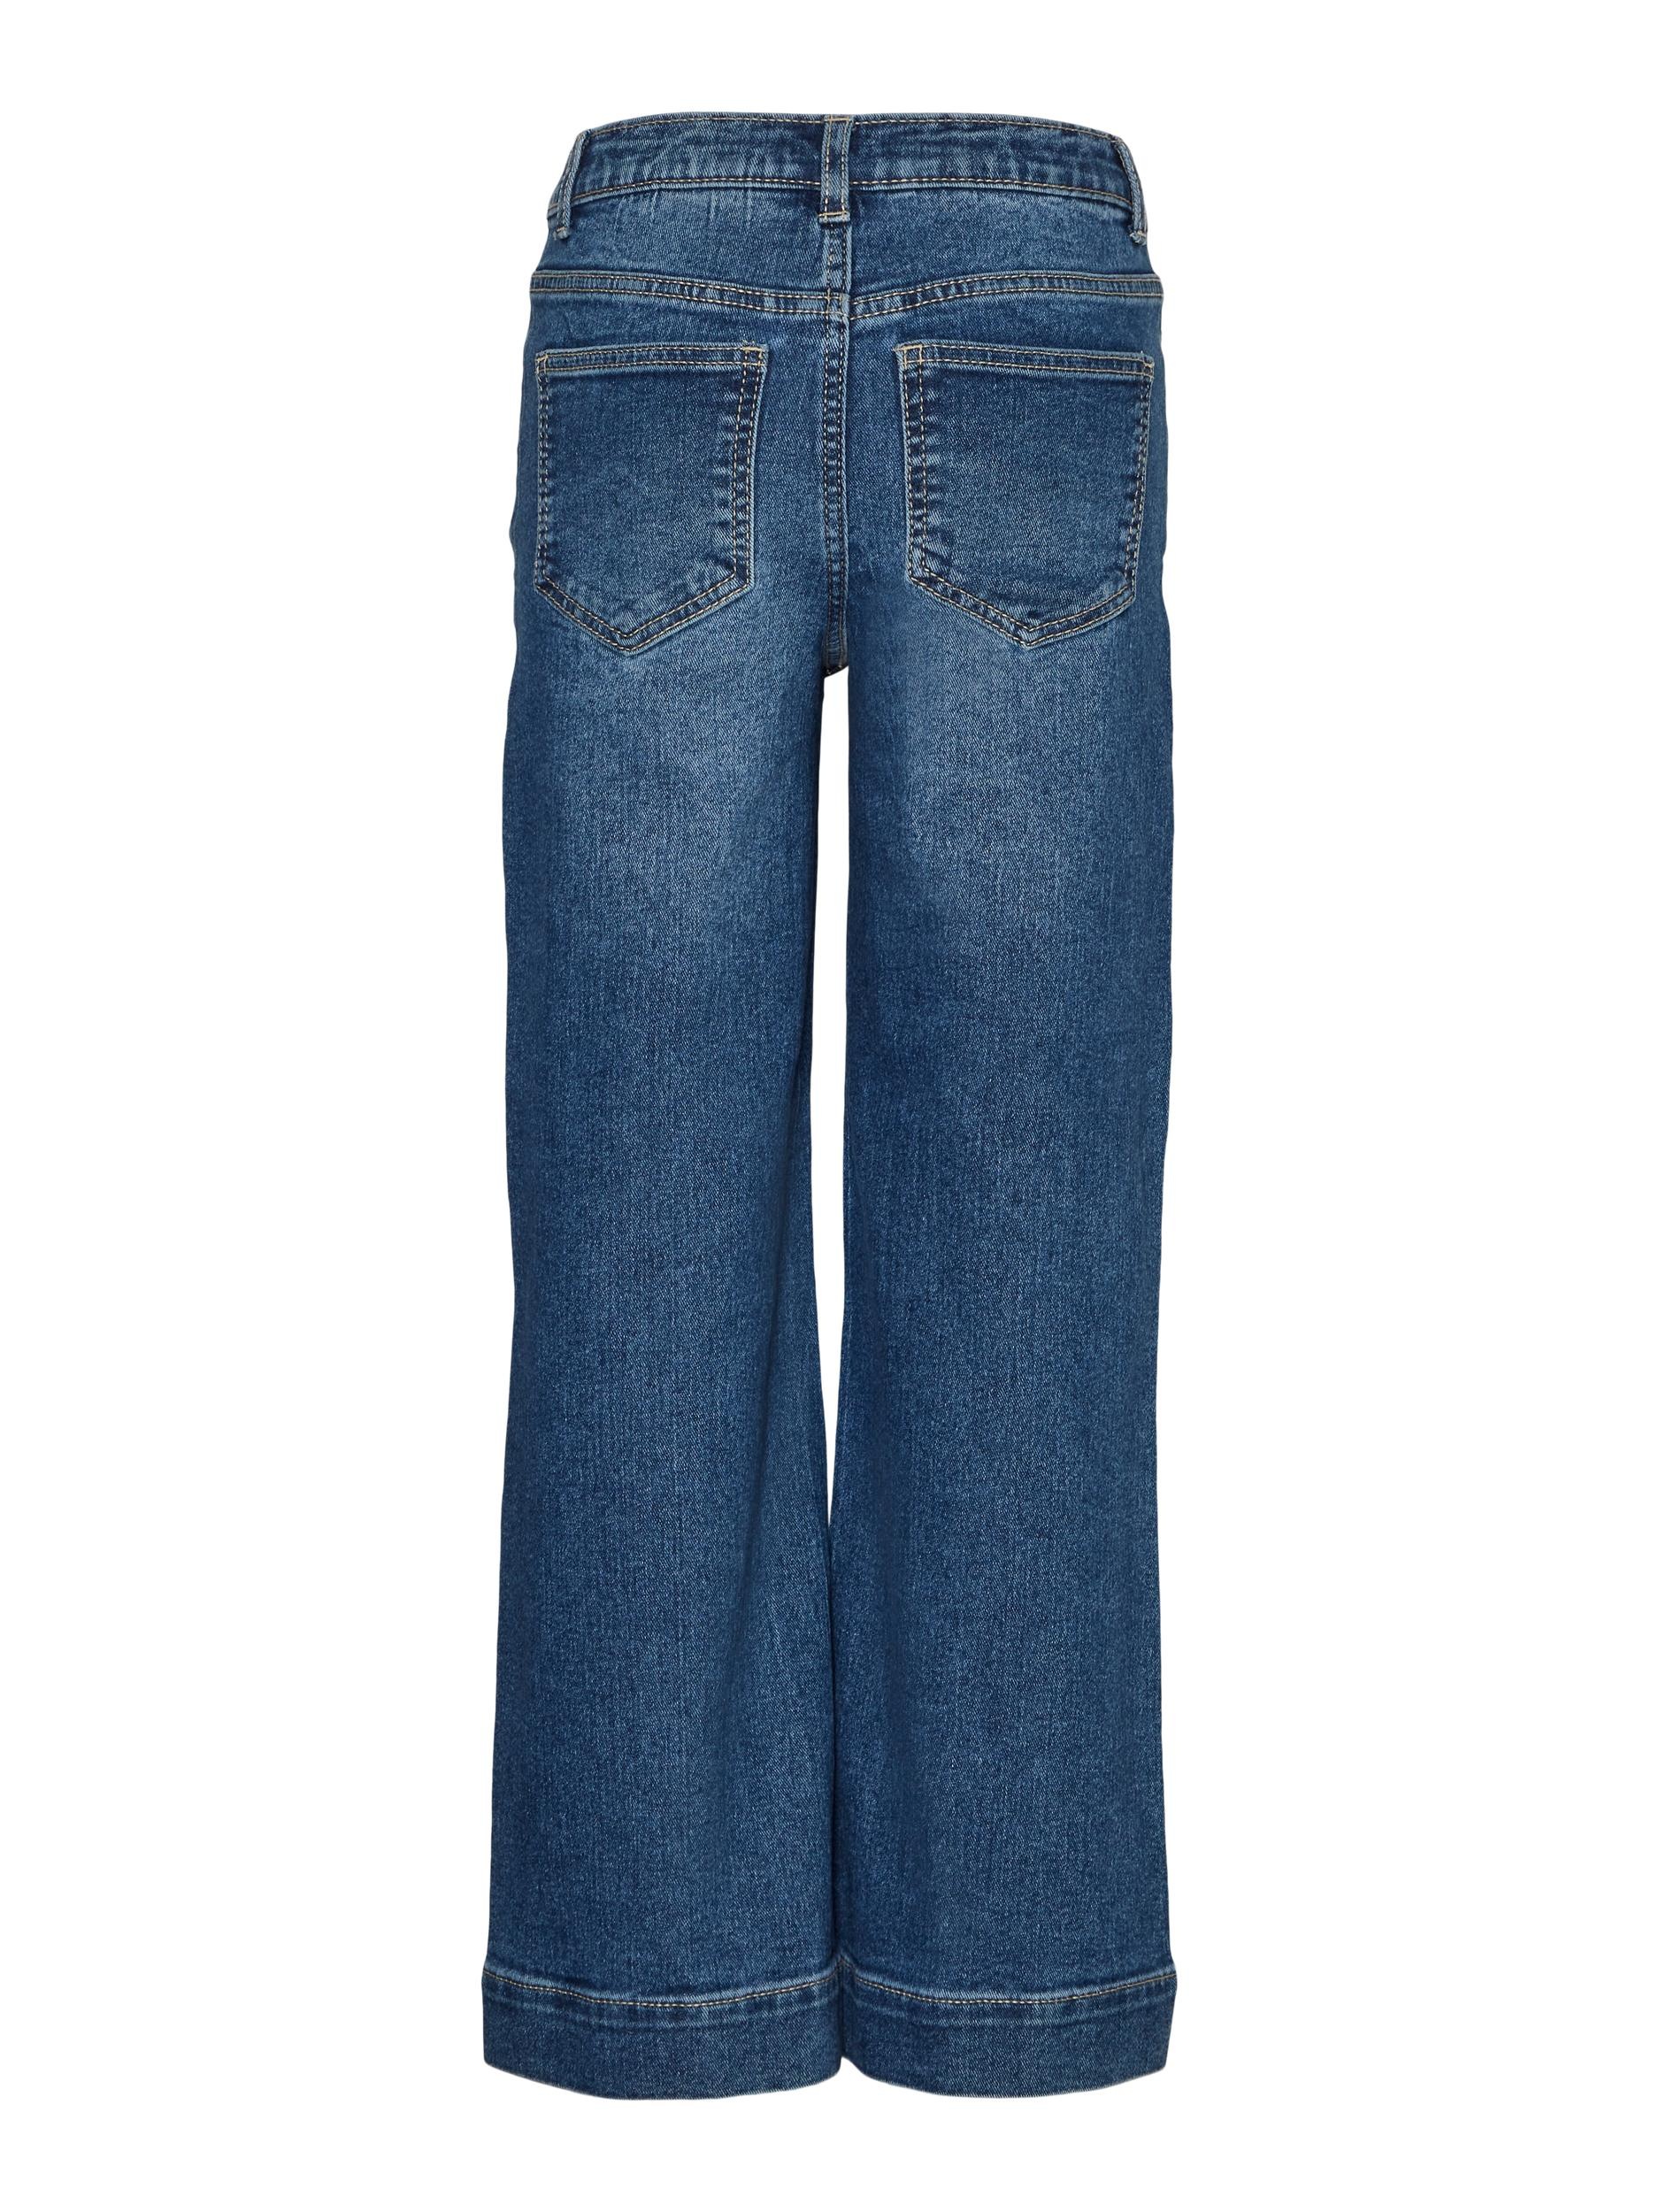 Vero Moda Girl Loose-fit-Jeans WIDE GIRL OTTO DENIM »VMDAISY VI3337 JNS zu NOOS« Top-Preisen 